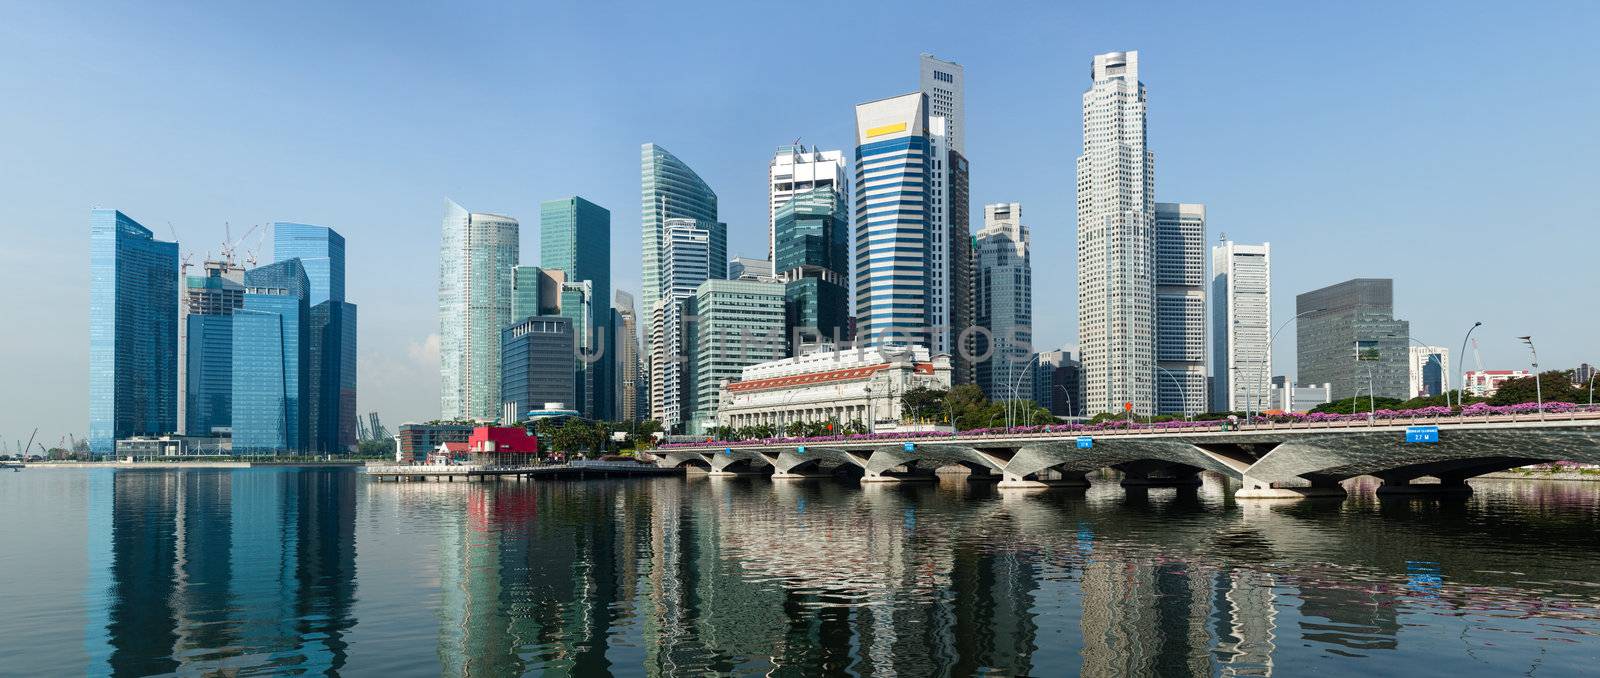 Singapore business center panorama by dimol